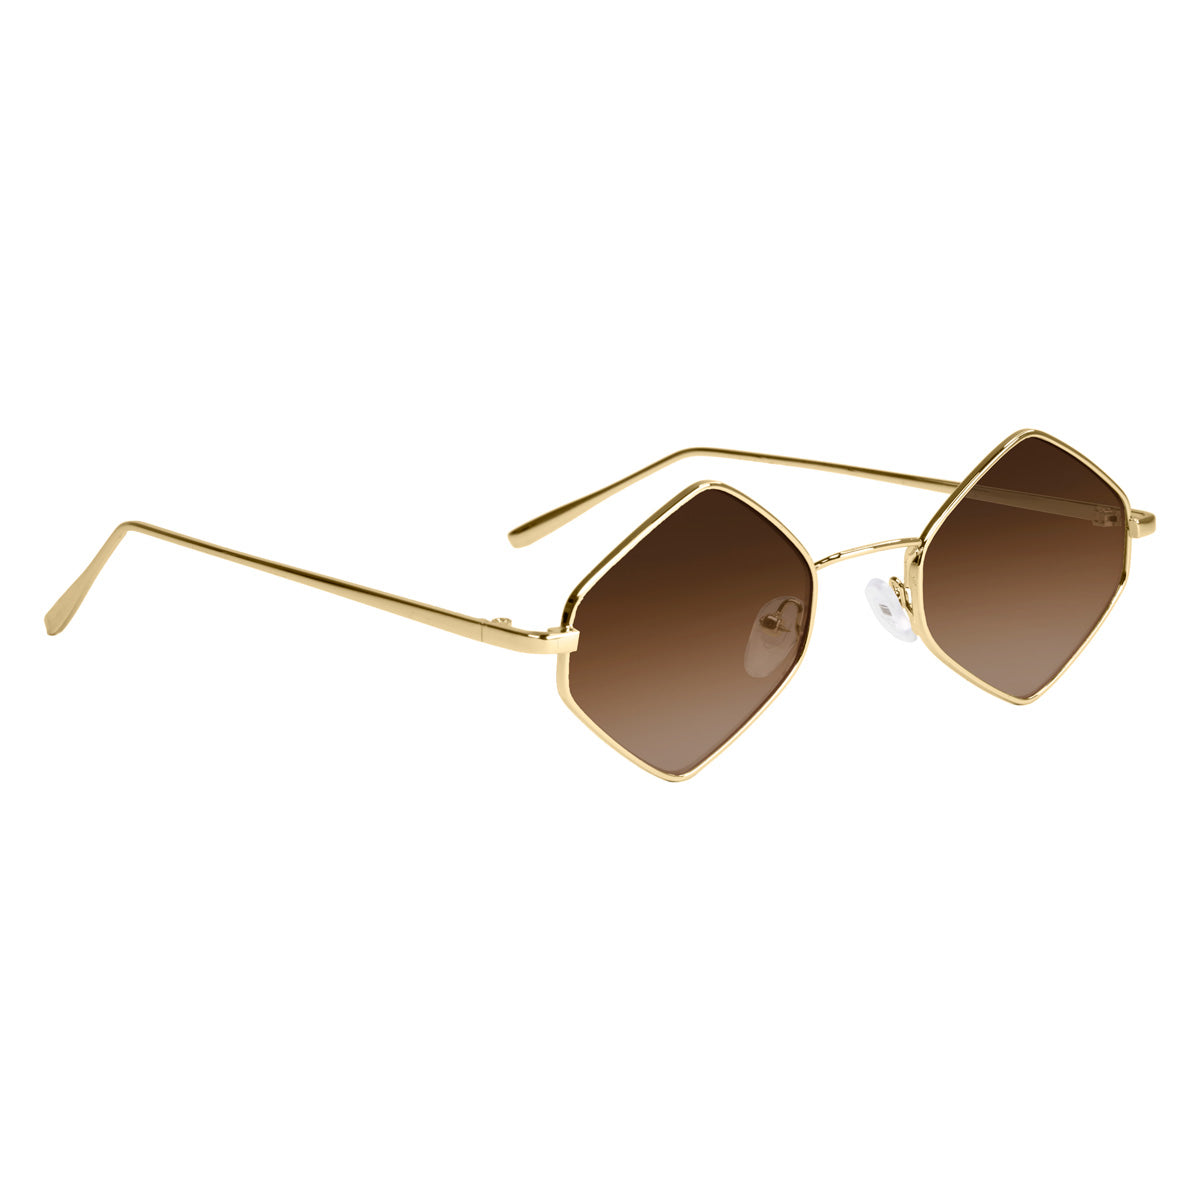 Angular small sunglasses